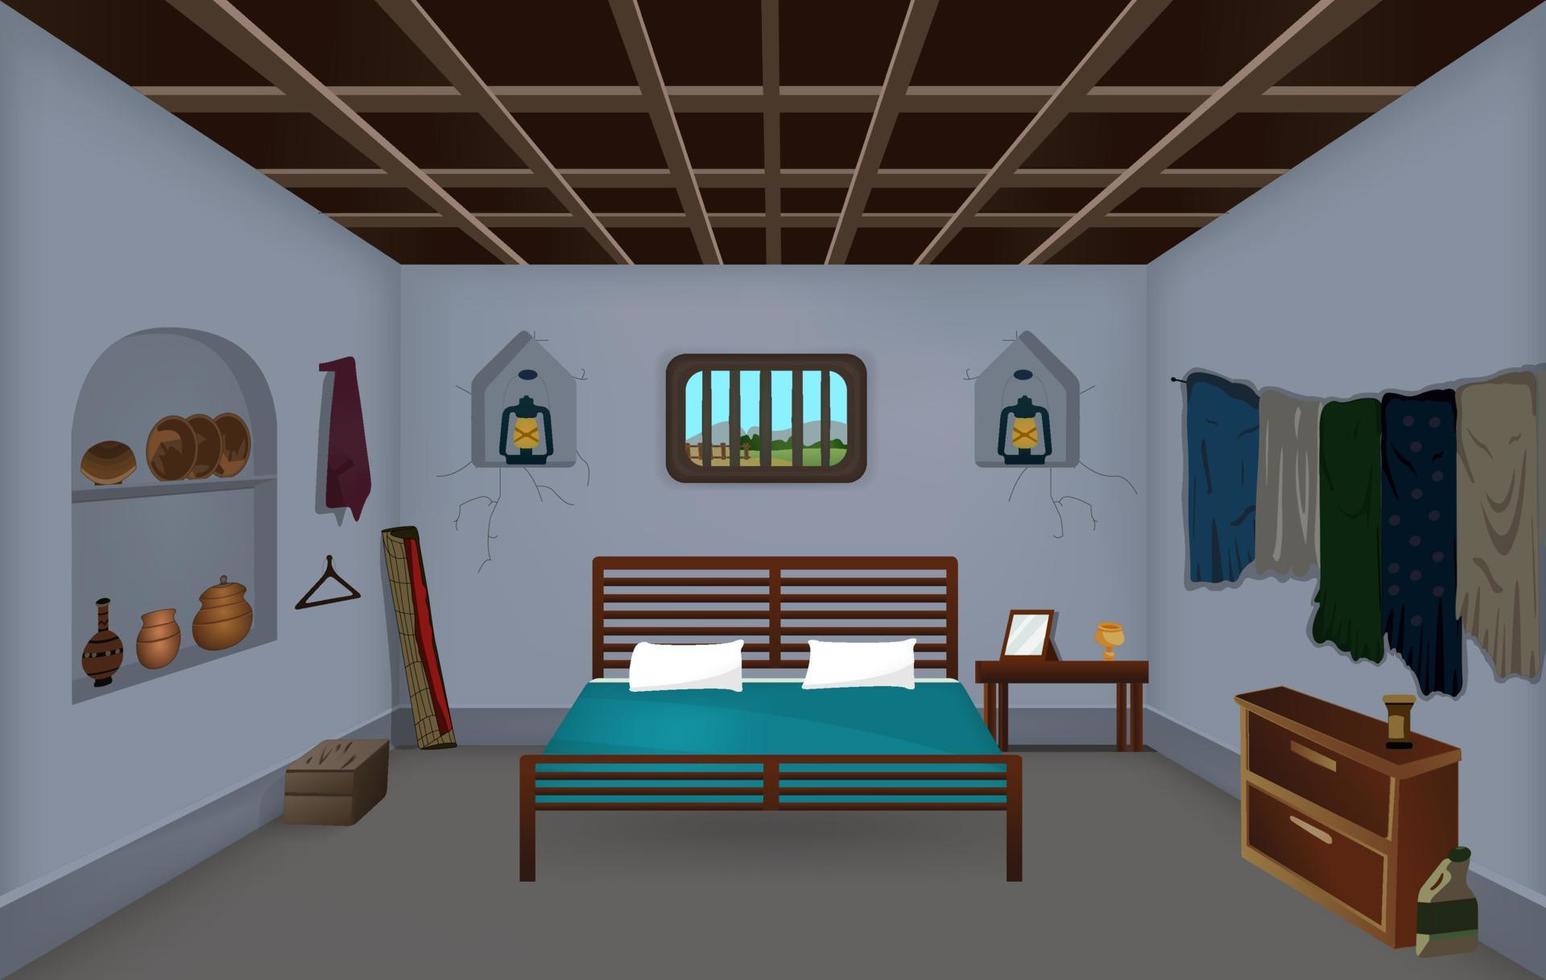 Dorfzimmer innerhalb des Karikaturhintergrundvektors, Innenvektorillustrationen des Armenhauszimmers. vektor